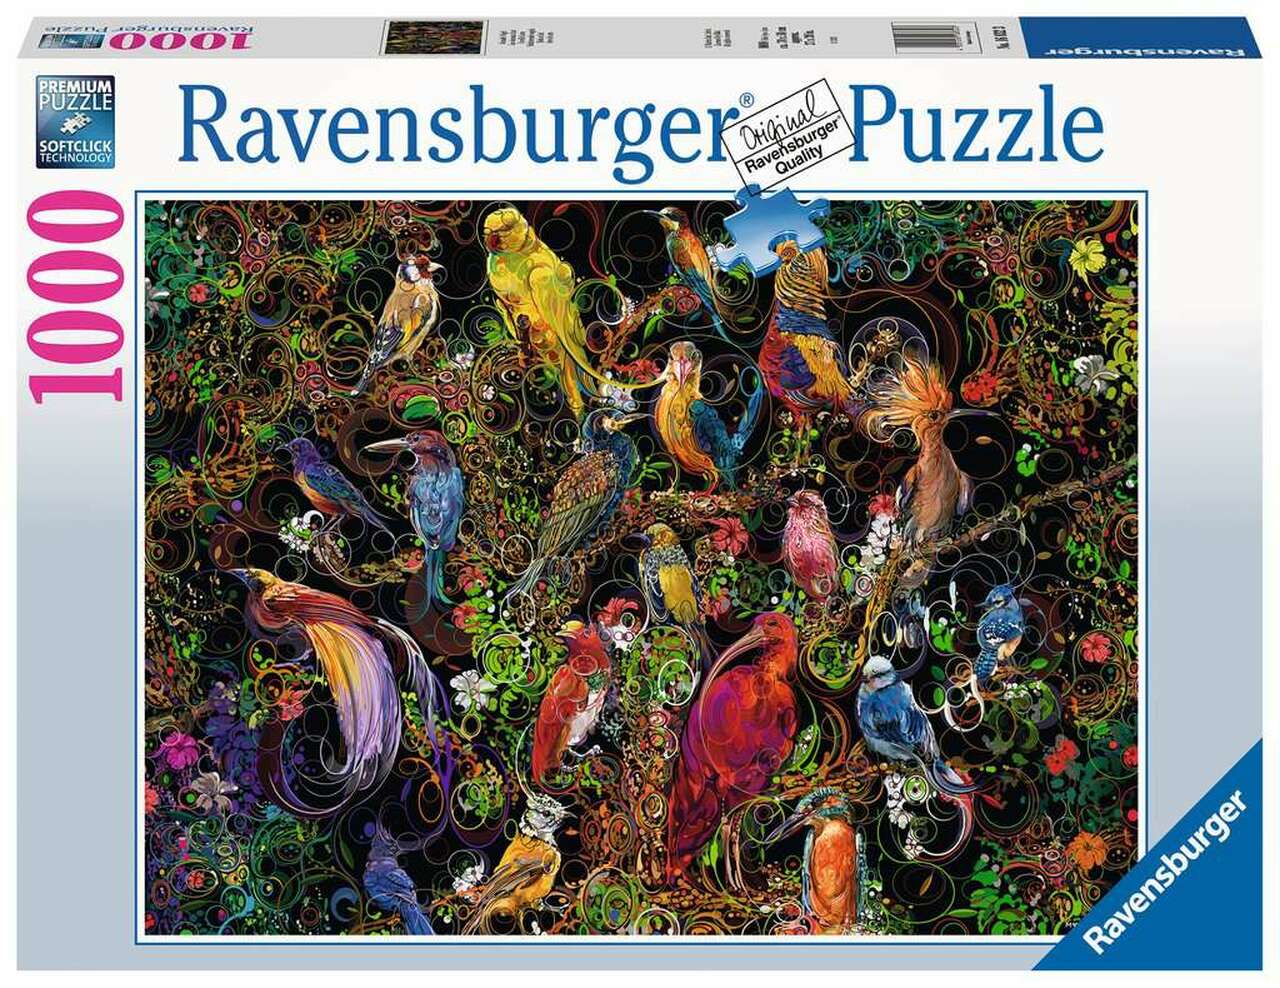 Garden Birds Ravensburger 1000 Piece Jigsaw Puzzle Sealed Box Free Shipping